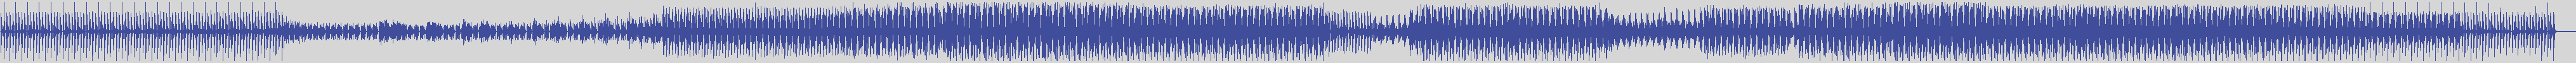 atomic_recordings [AR009] DB Boulevard - Voyage [Original Mix] audio wave form